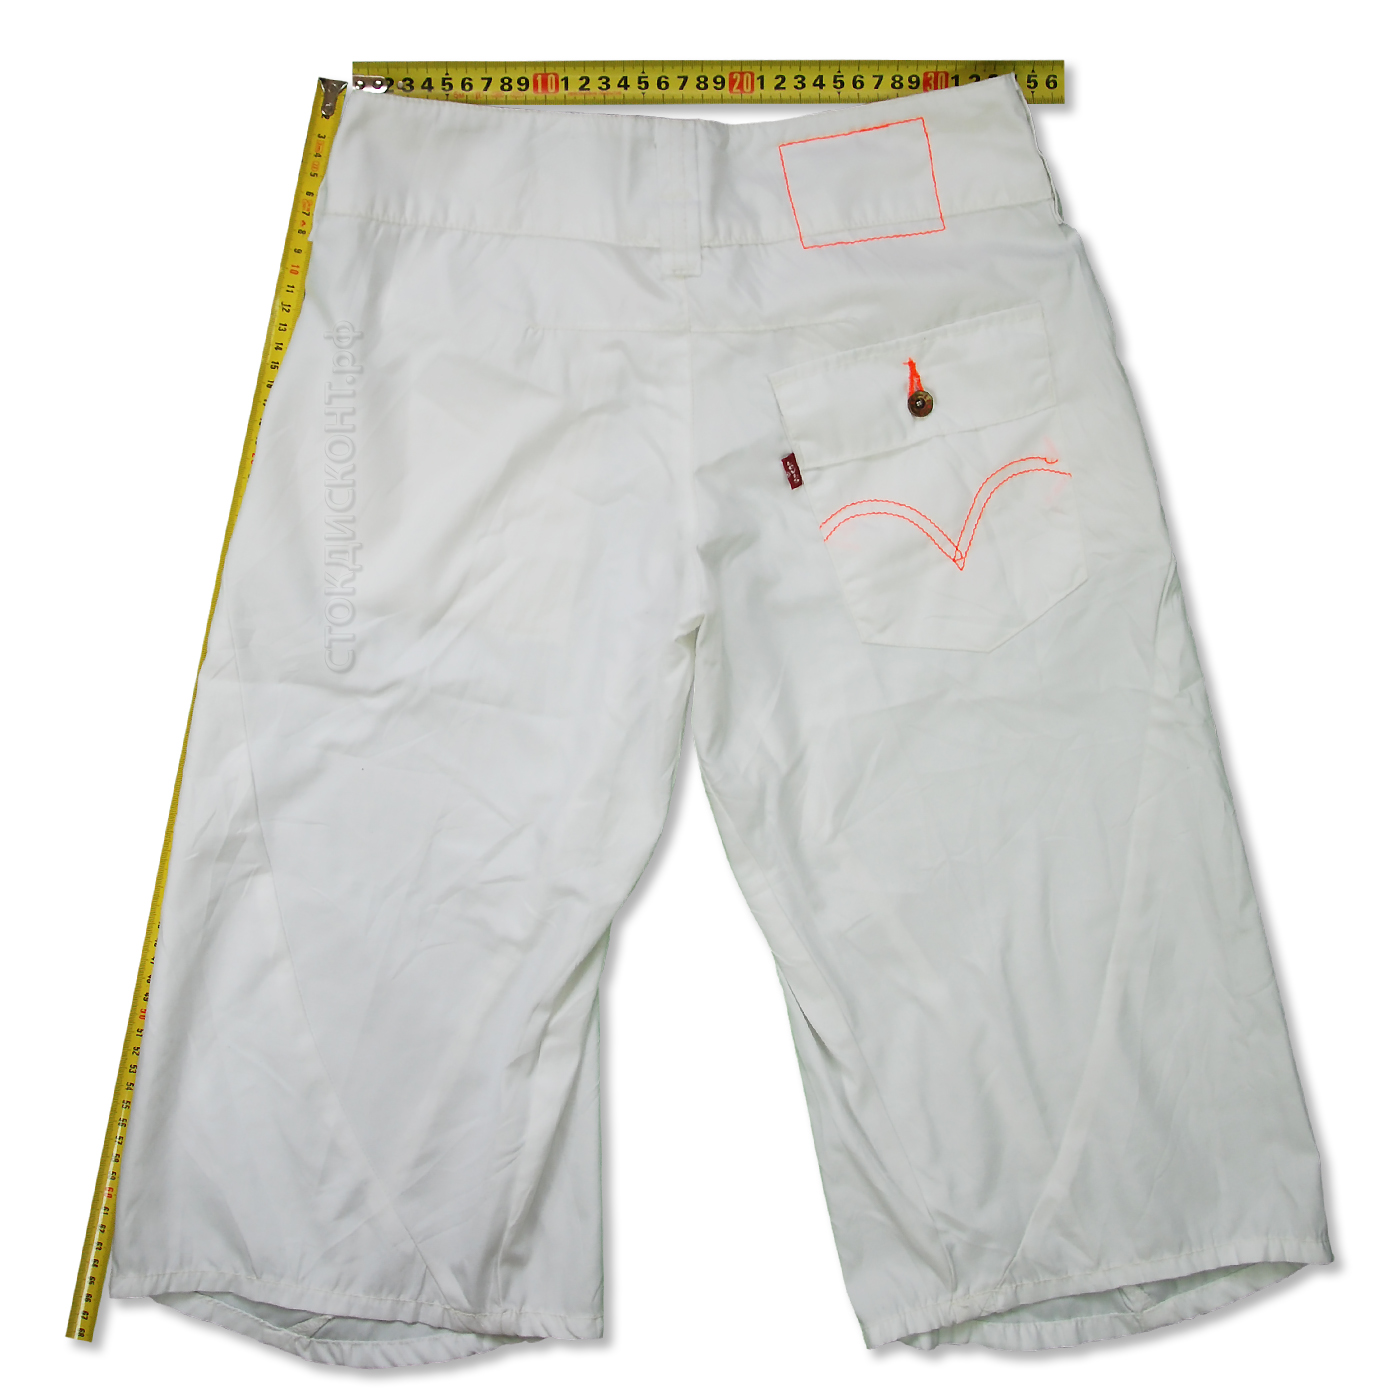 LEVIS Engineered Bermuda Shorts White